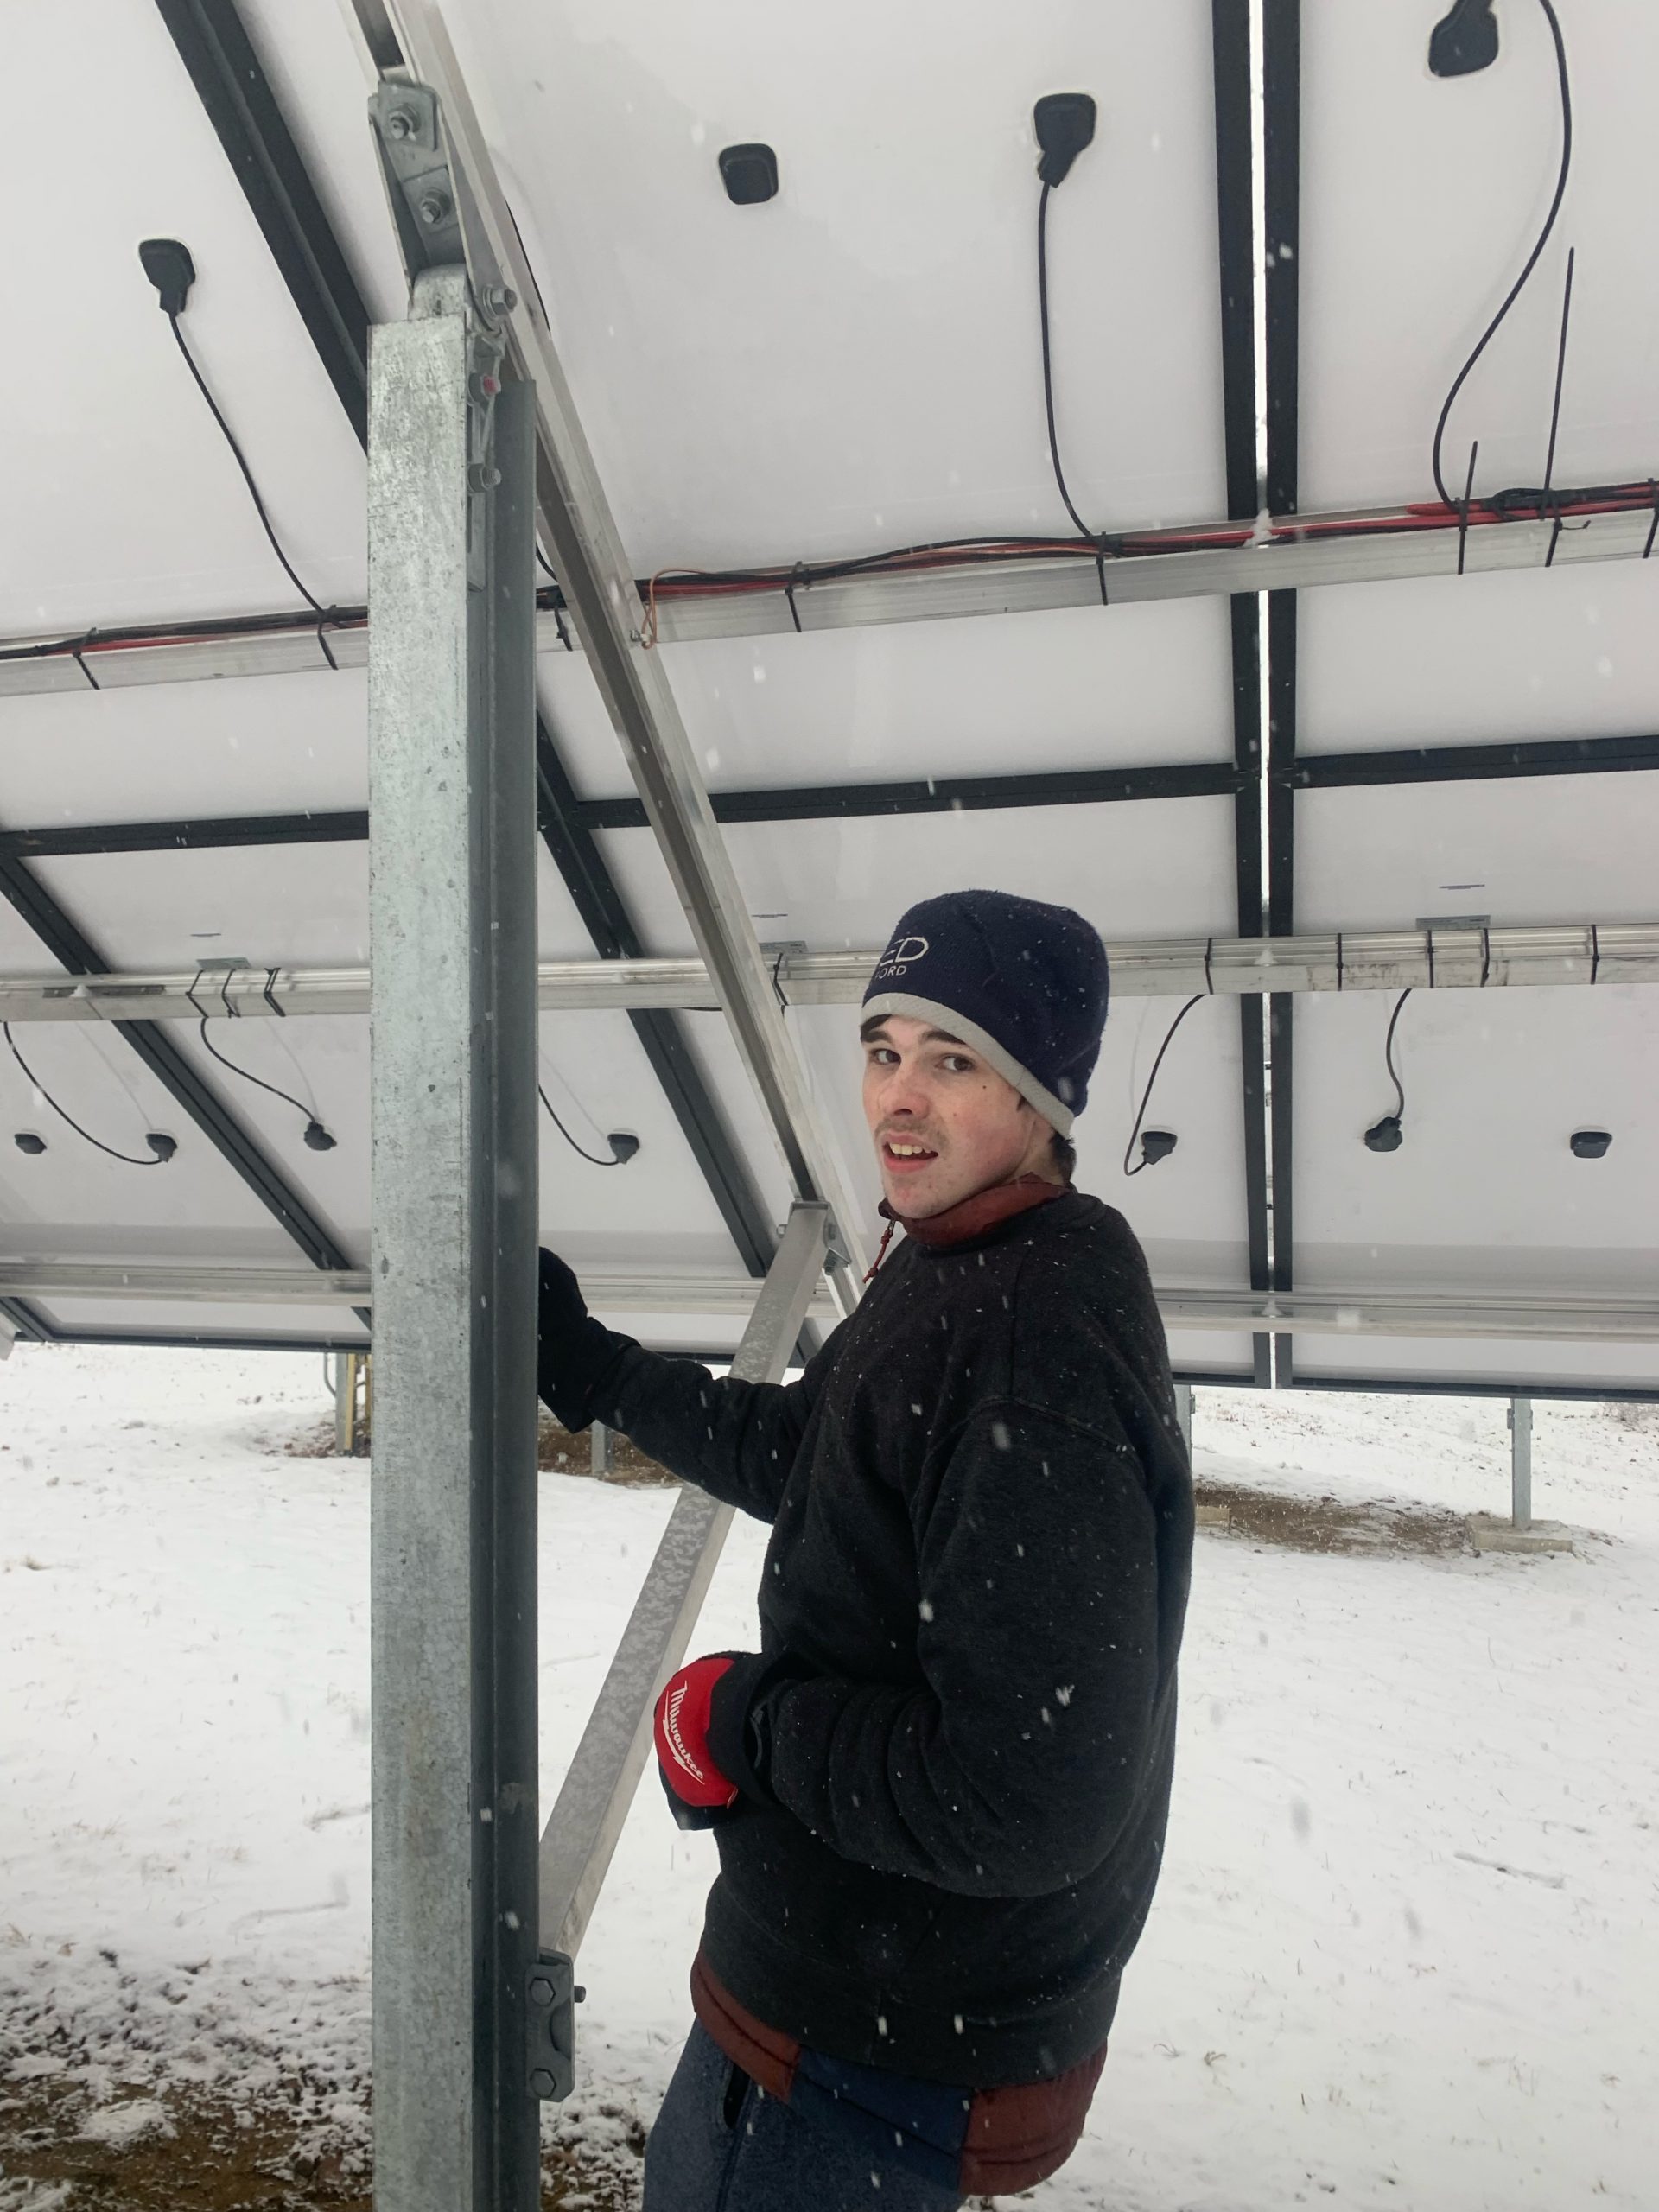 Mark Flanagan DTL Electric - PV Solar Installations New Hampshire